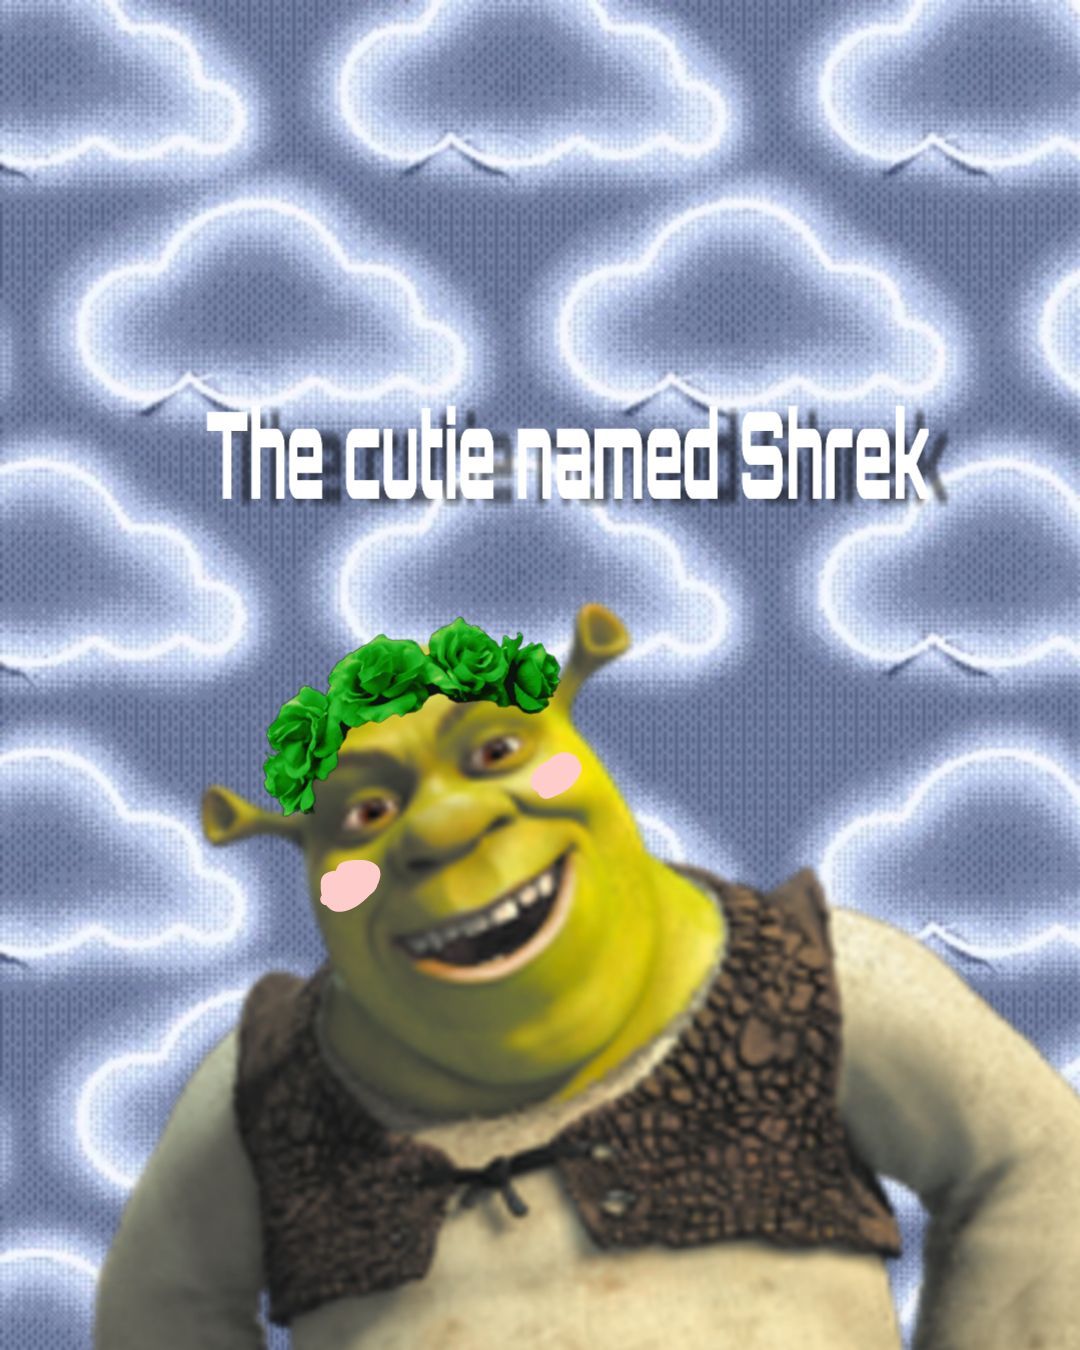 The cutie named Shrek - Shrek